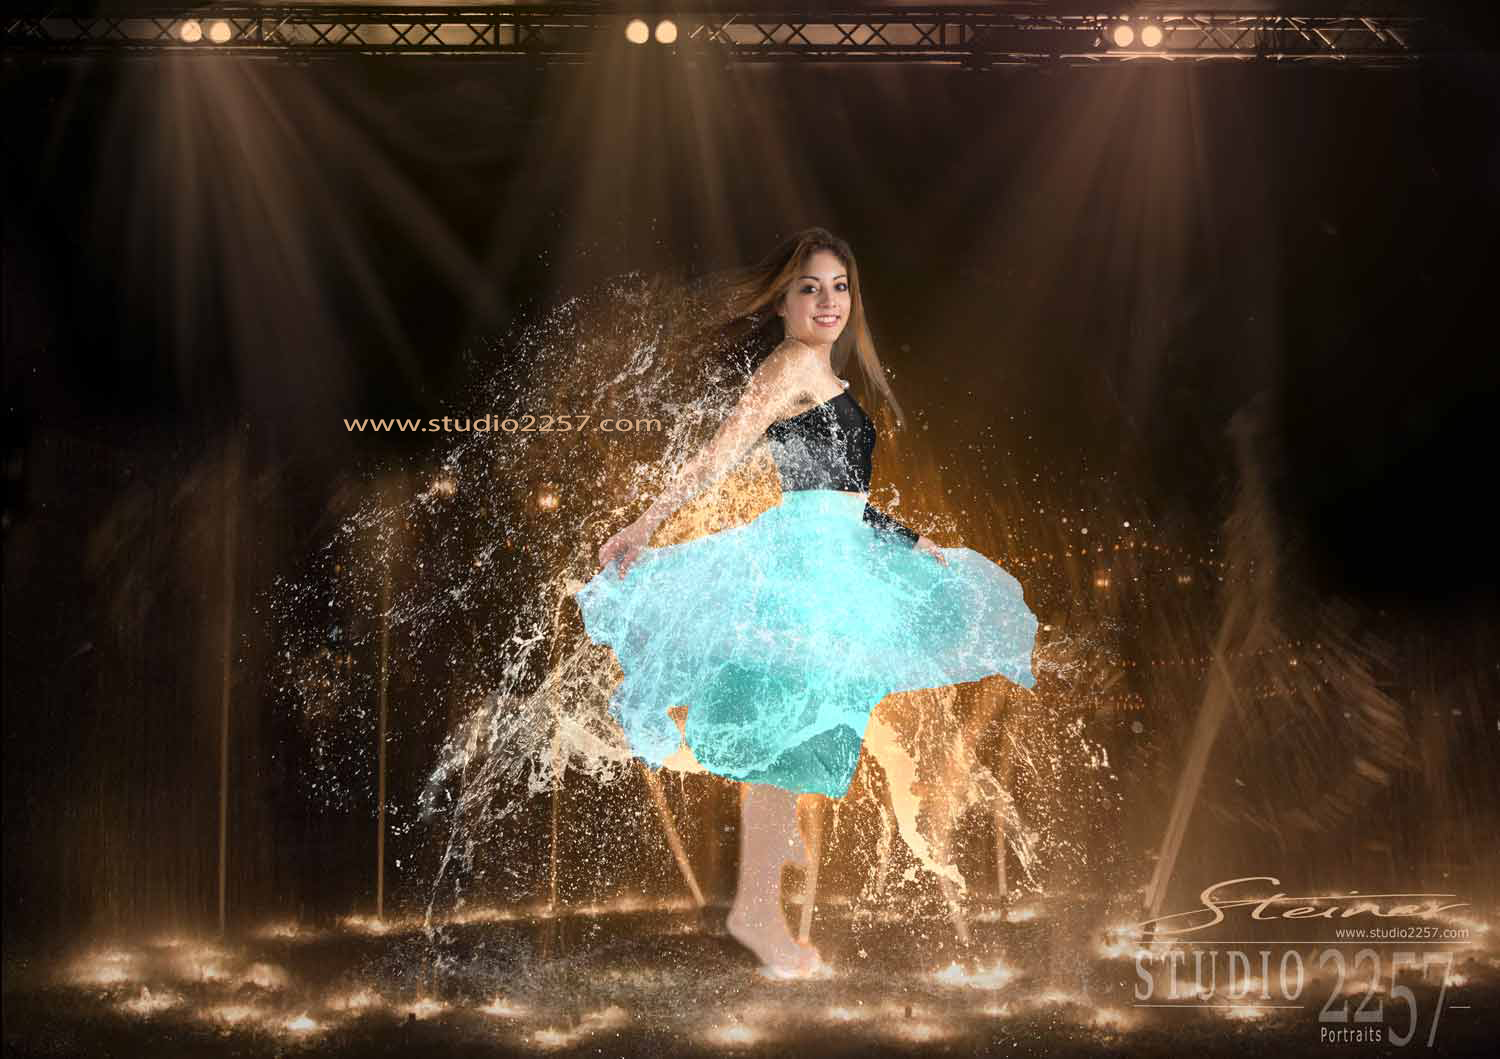 studio photo of teenage girl dancing in water fountain